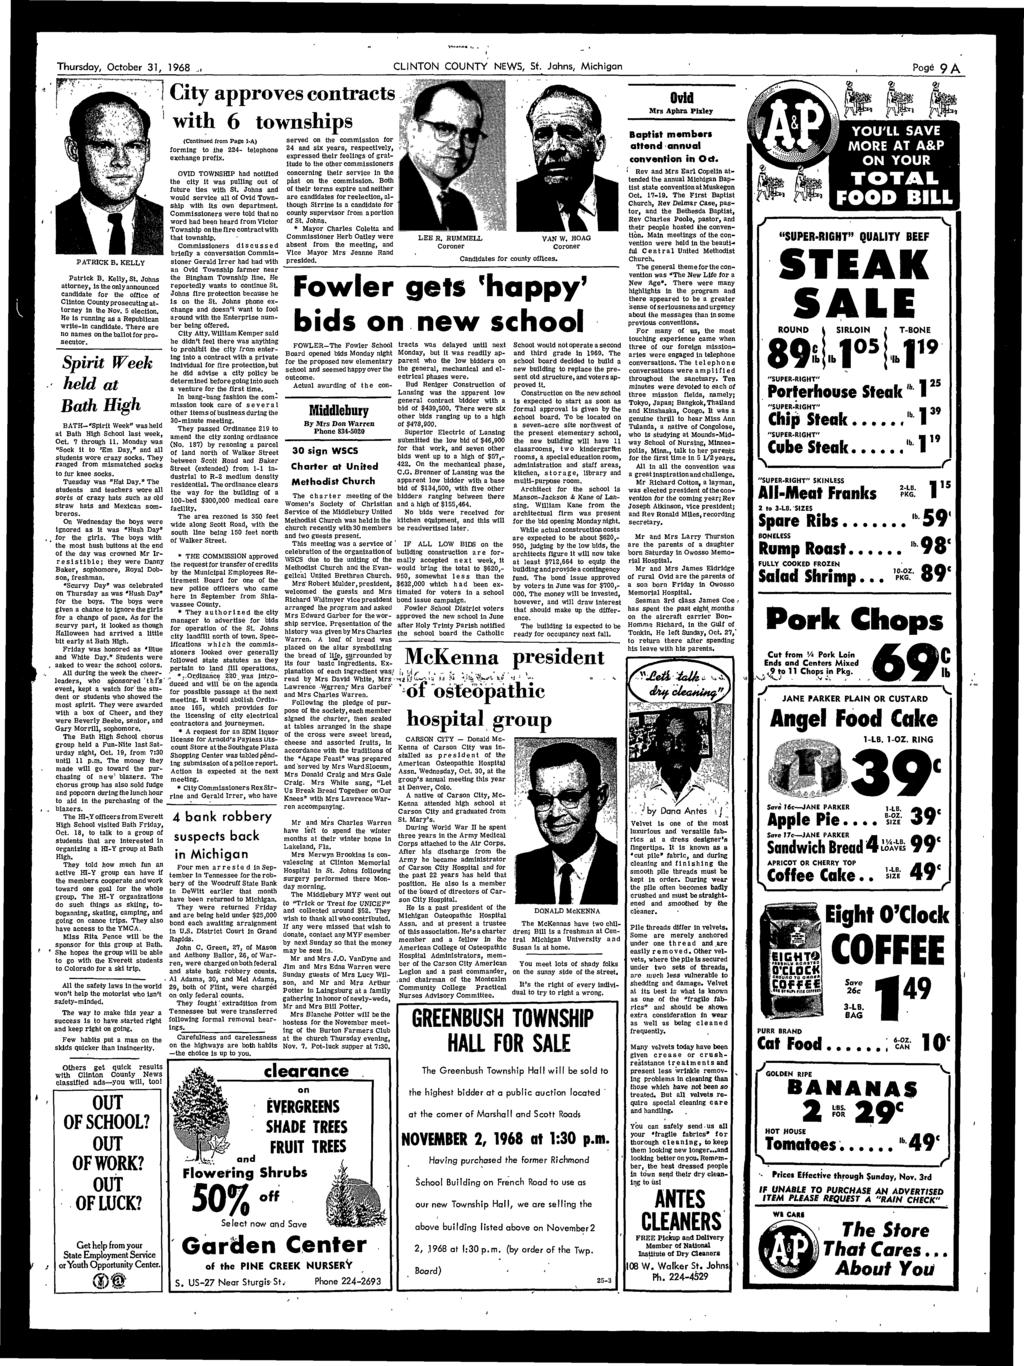 Thursday, October 31, 1968 CLINTON COUNTY NEWS, St. Johns, Mchgan Page 9 A ^-.«, w Bw^H*!, vhhr* -*-)*/^. PATRICK B. KELLY Patrck B. Kelly, St.